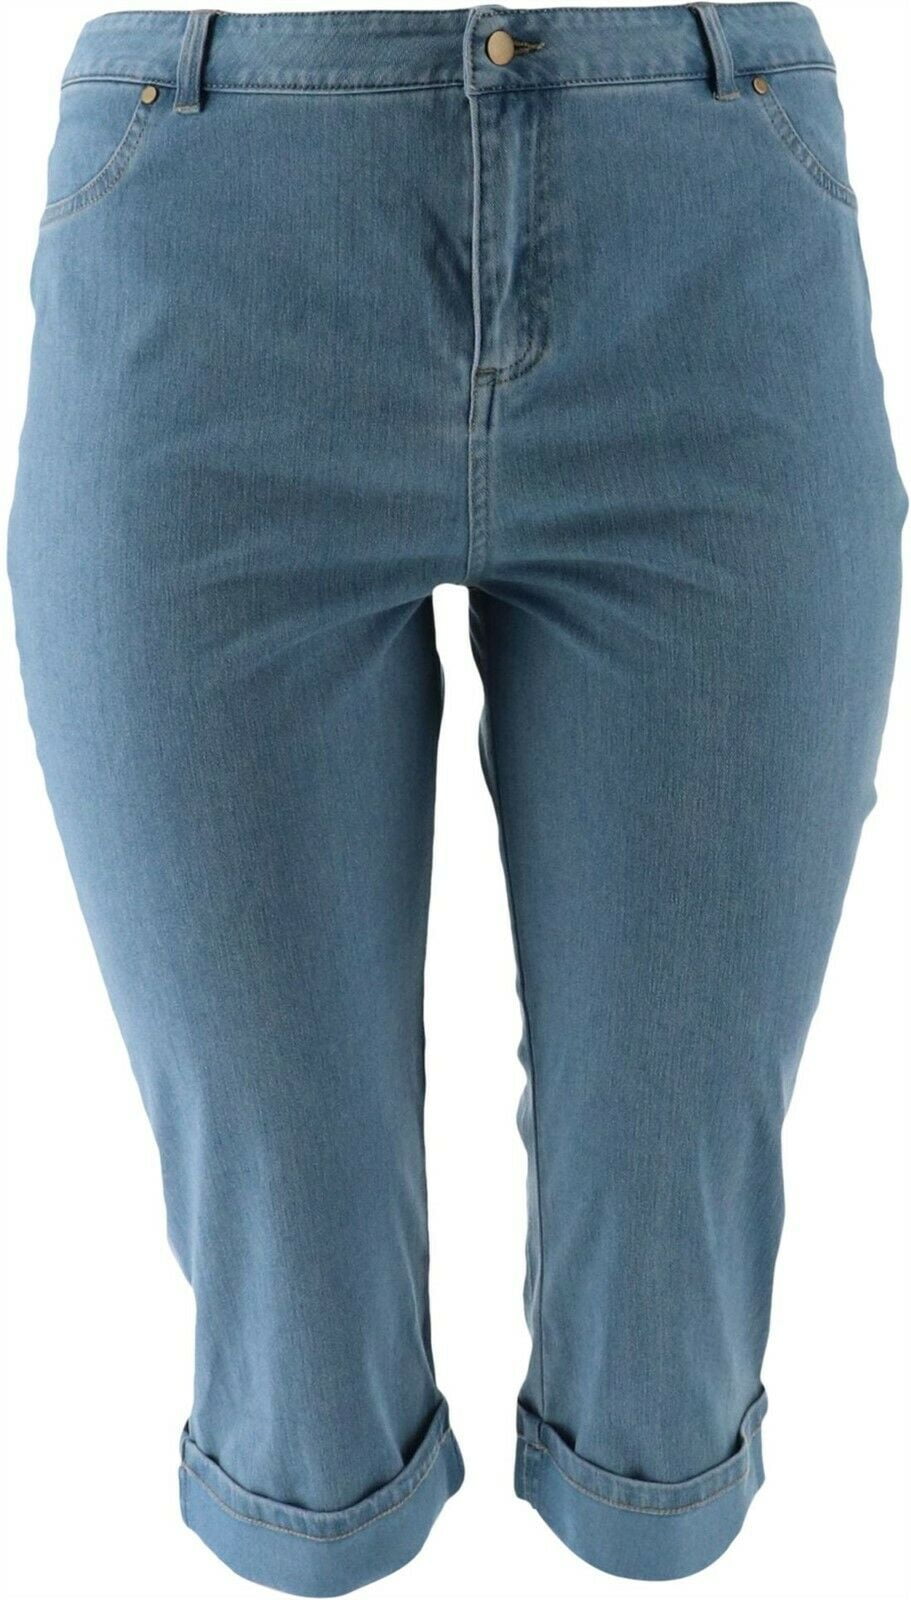 Joan Rivers - Joan Rivers Petite Stretch Denim Cropped Pants Women's ...